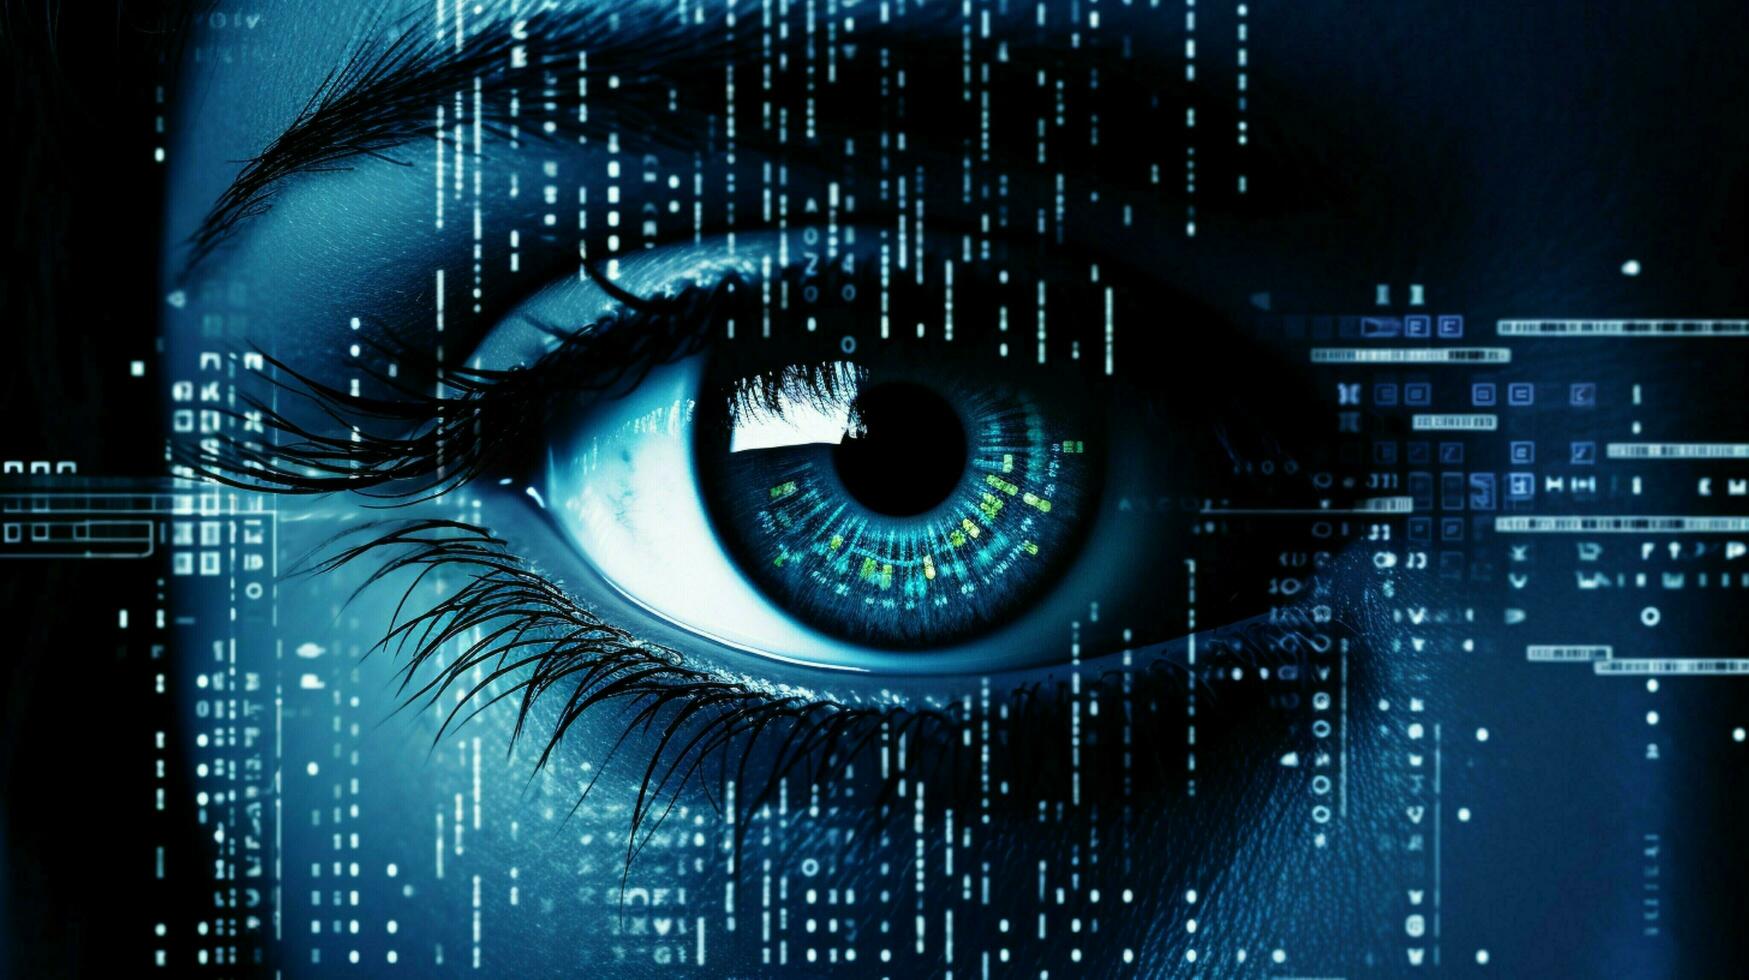 humano ojo acecho futurista seguridad sistema datos foto